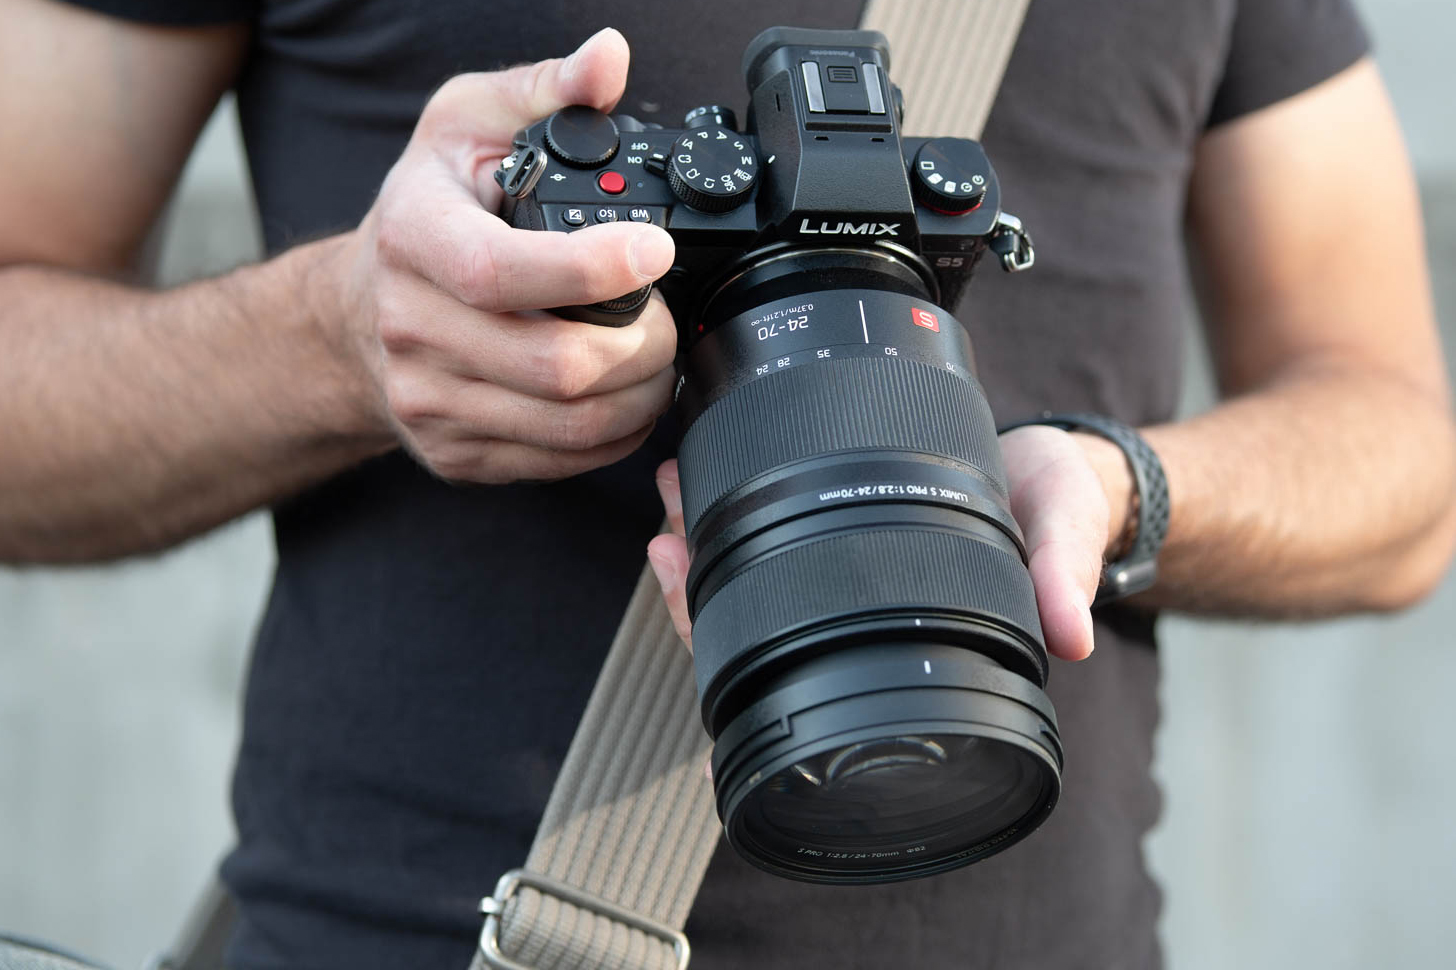 kampioen koken haalbaar Panasonic Lumix S5 review: A True Enthusiast's Camera | Digital Trends